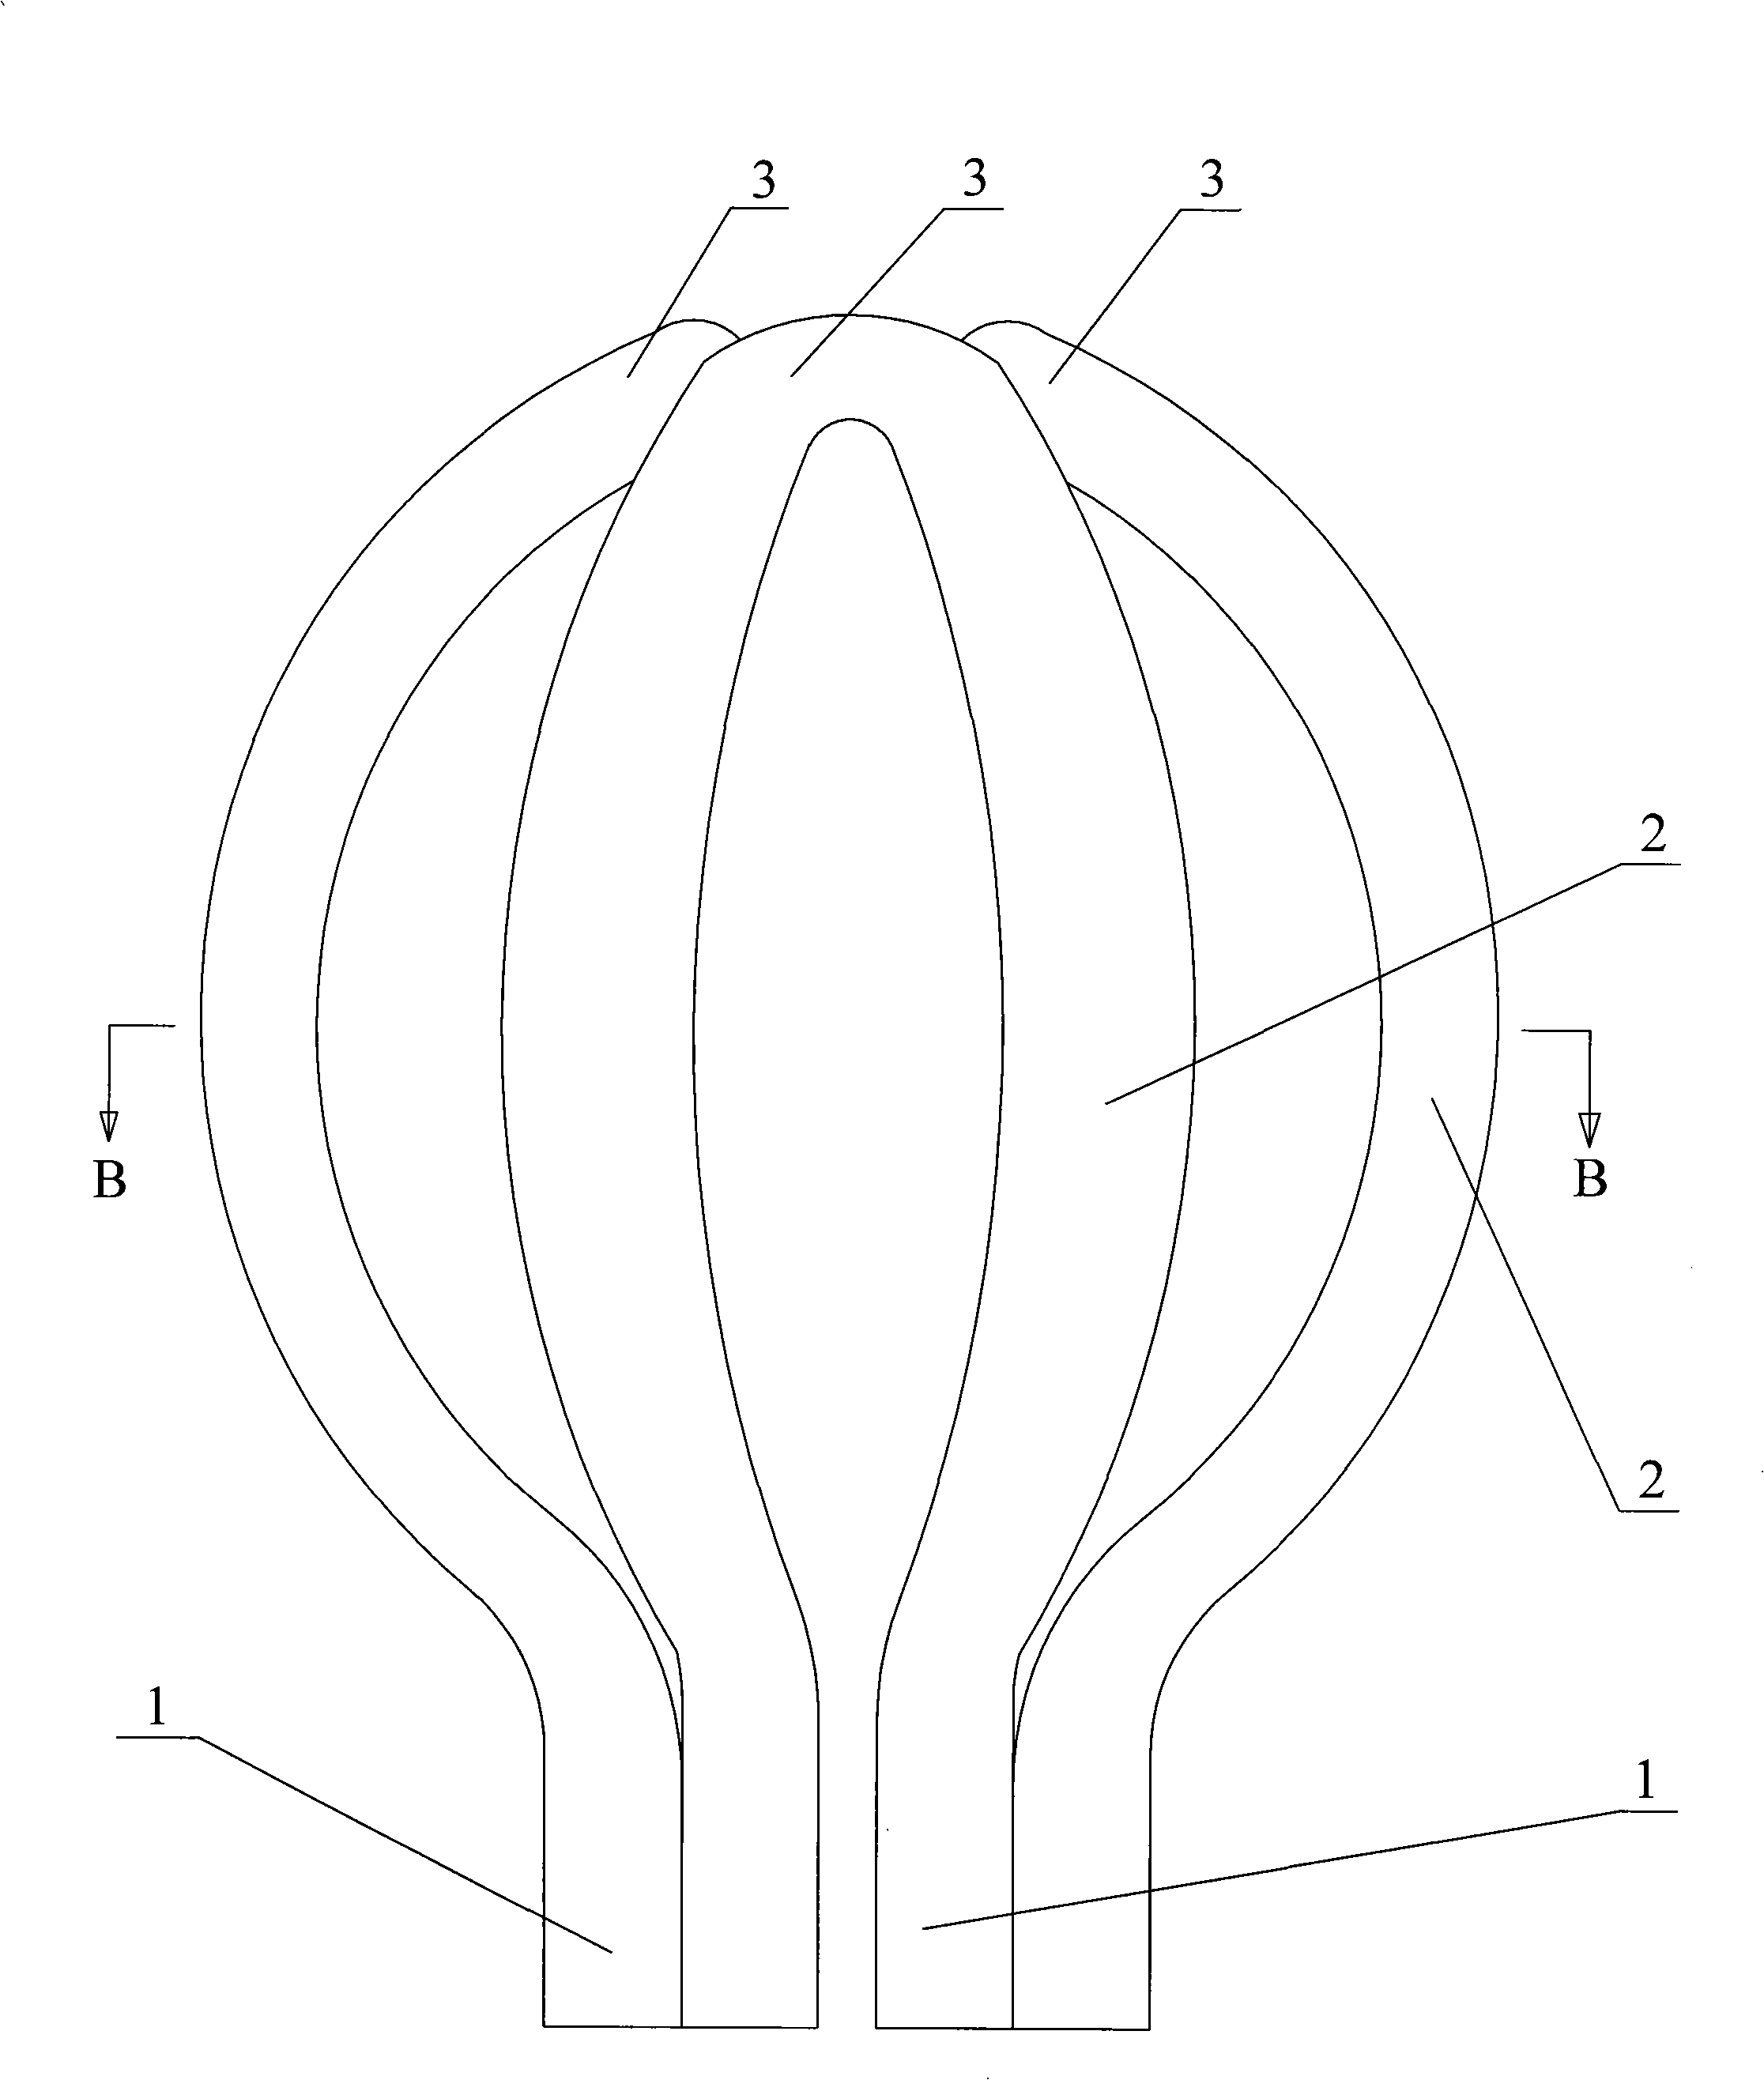 Flat circuit lamp tube and spherical lotus lamp made of this tube